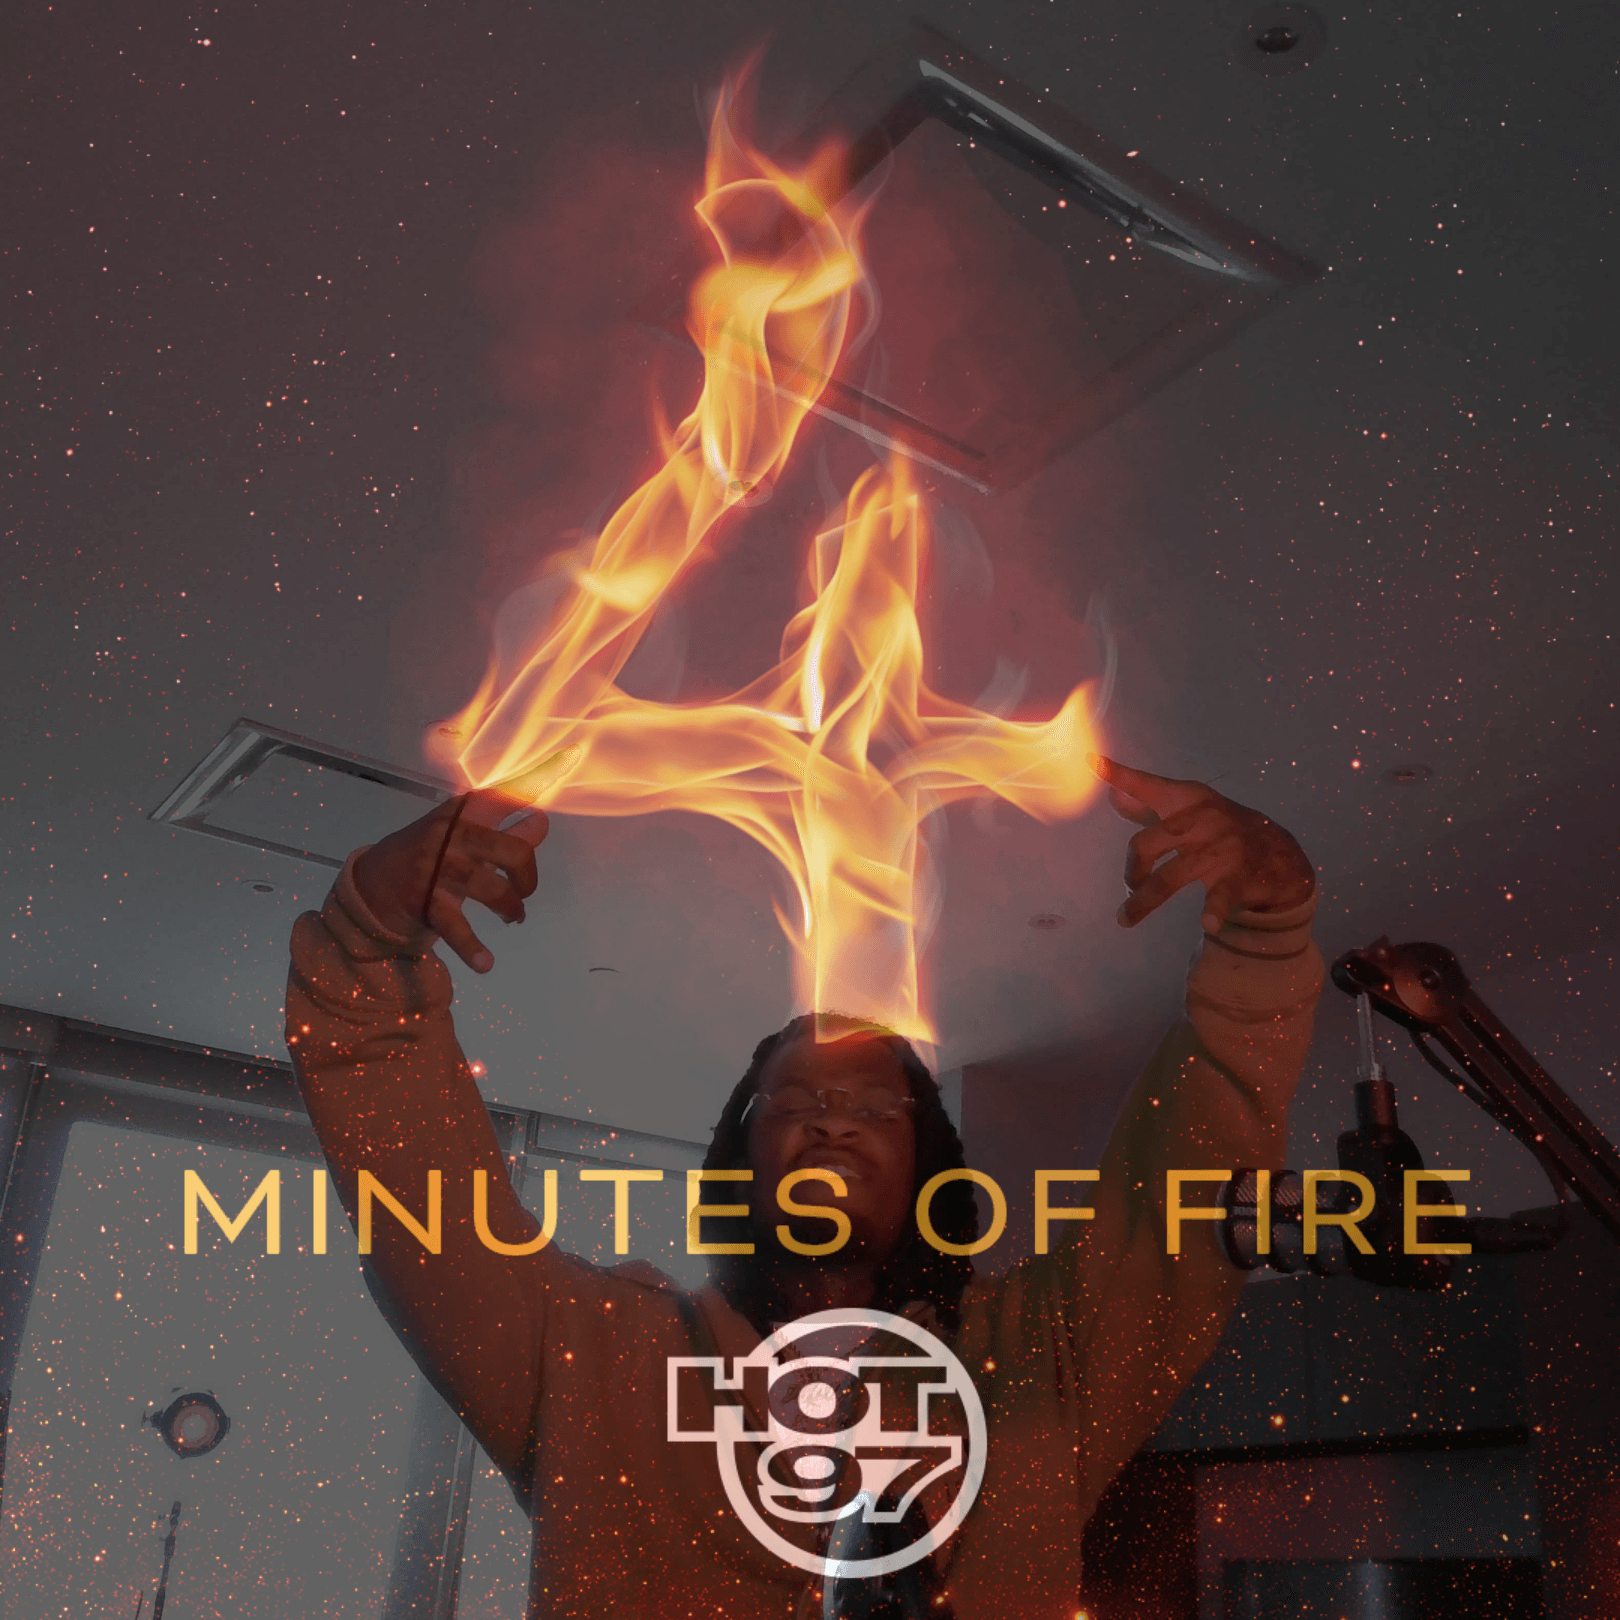 4 Minutes of Fire Presents D4M $loan